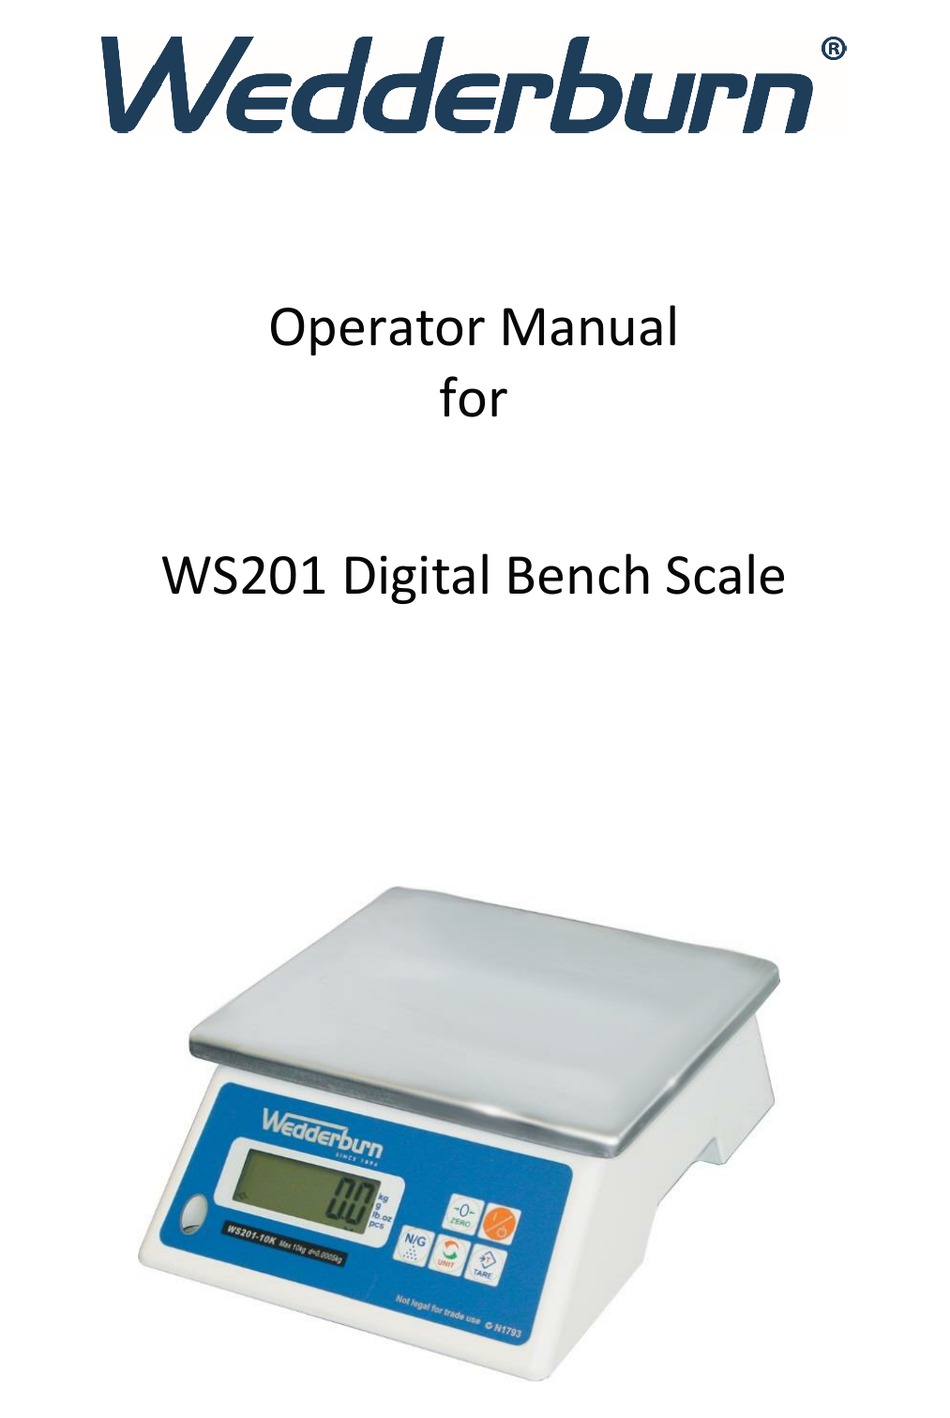 WEDDERBURN WS201 OPERATOR'S MANUAL Pdf Download | ManualsLib